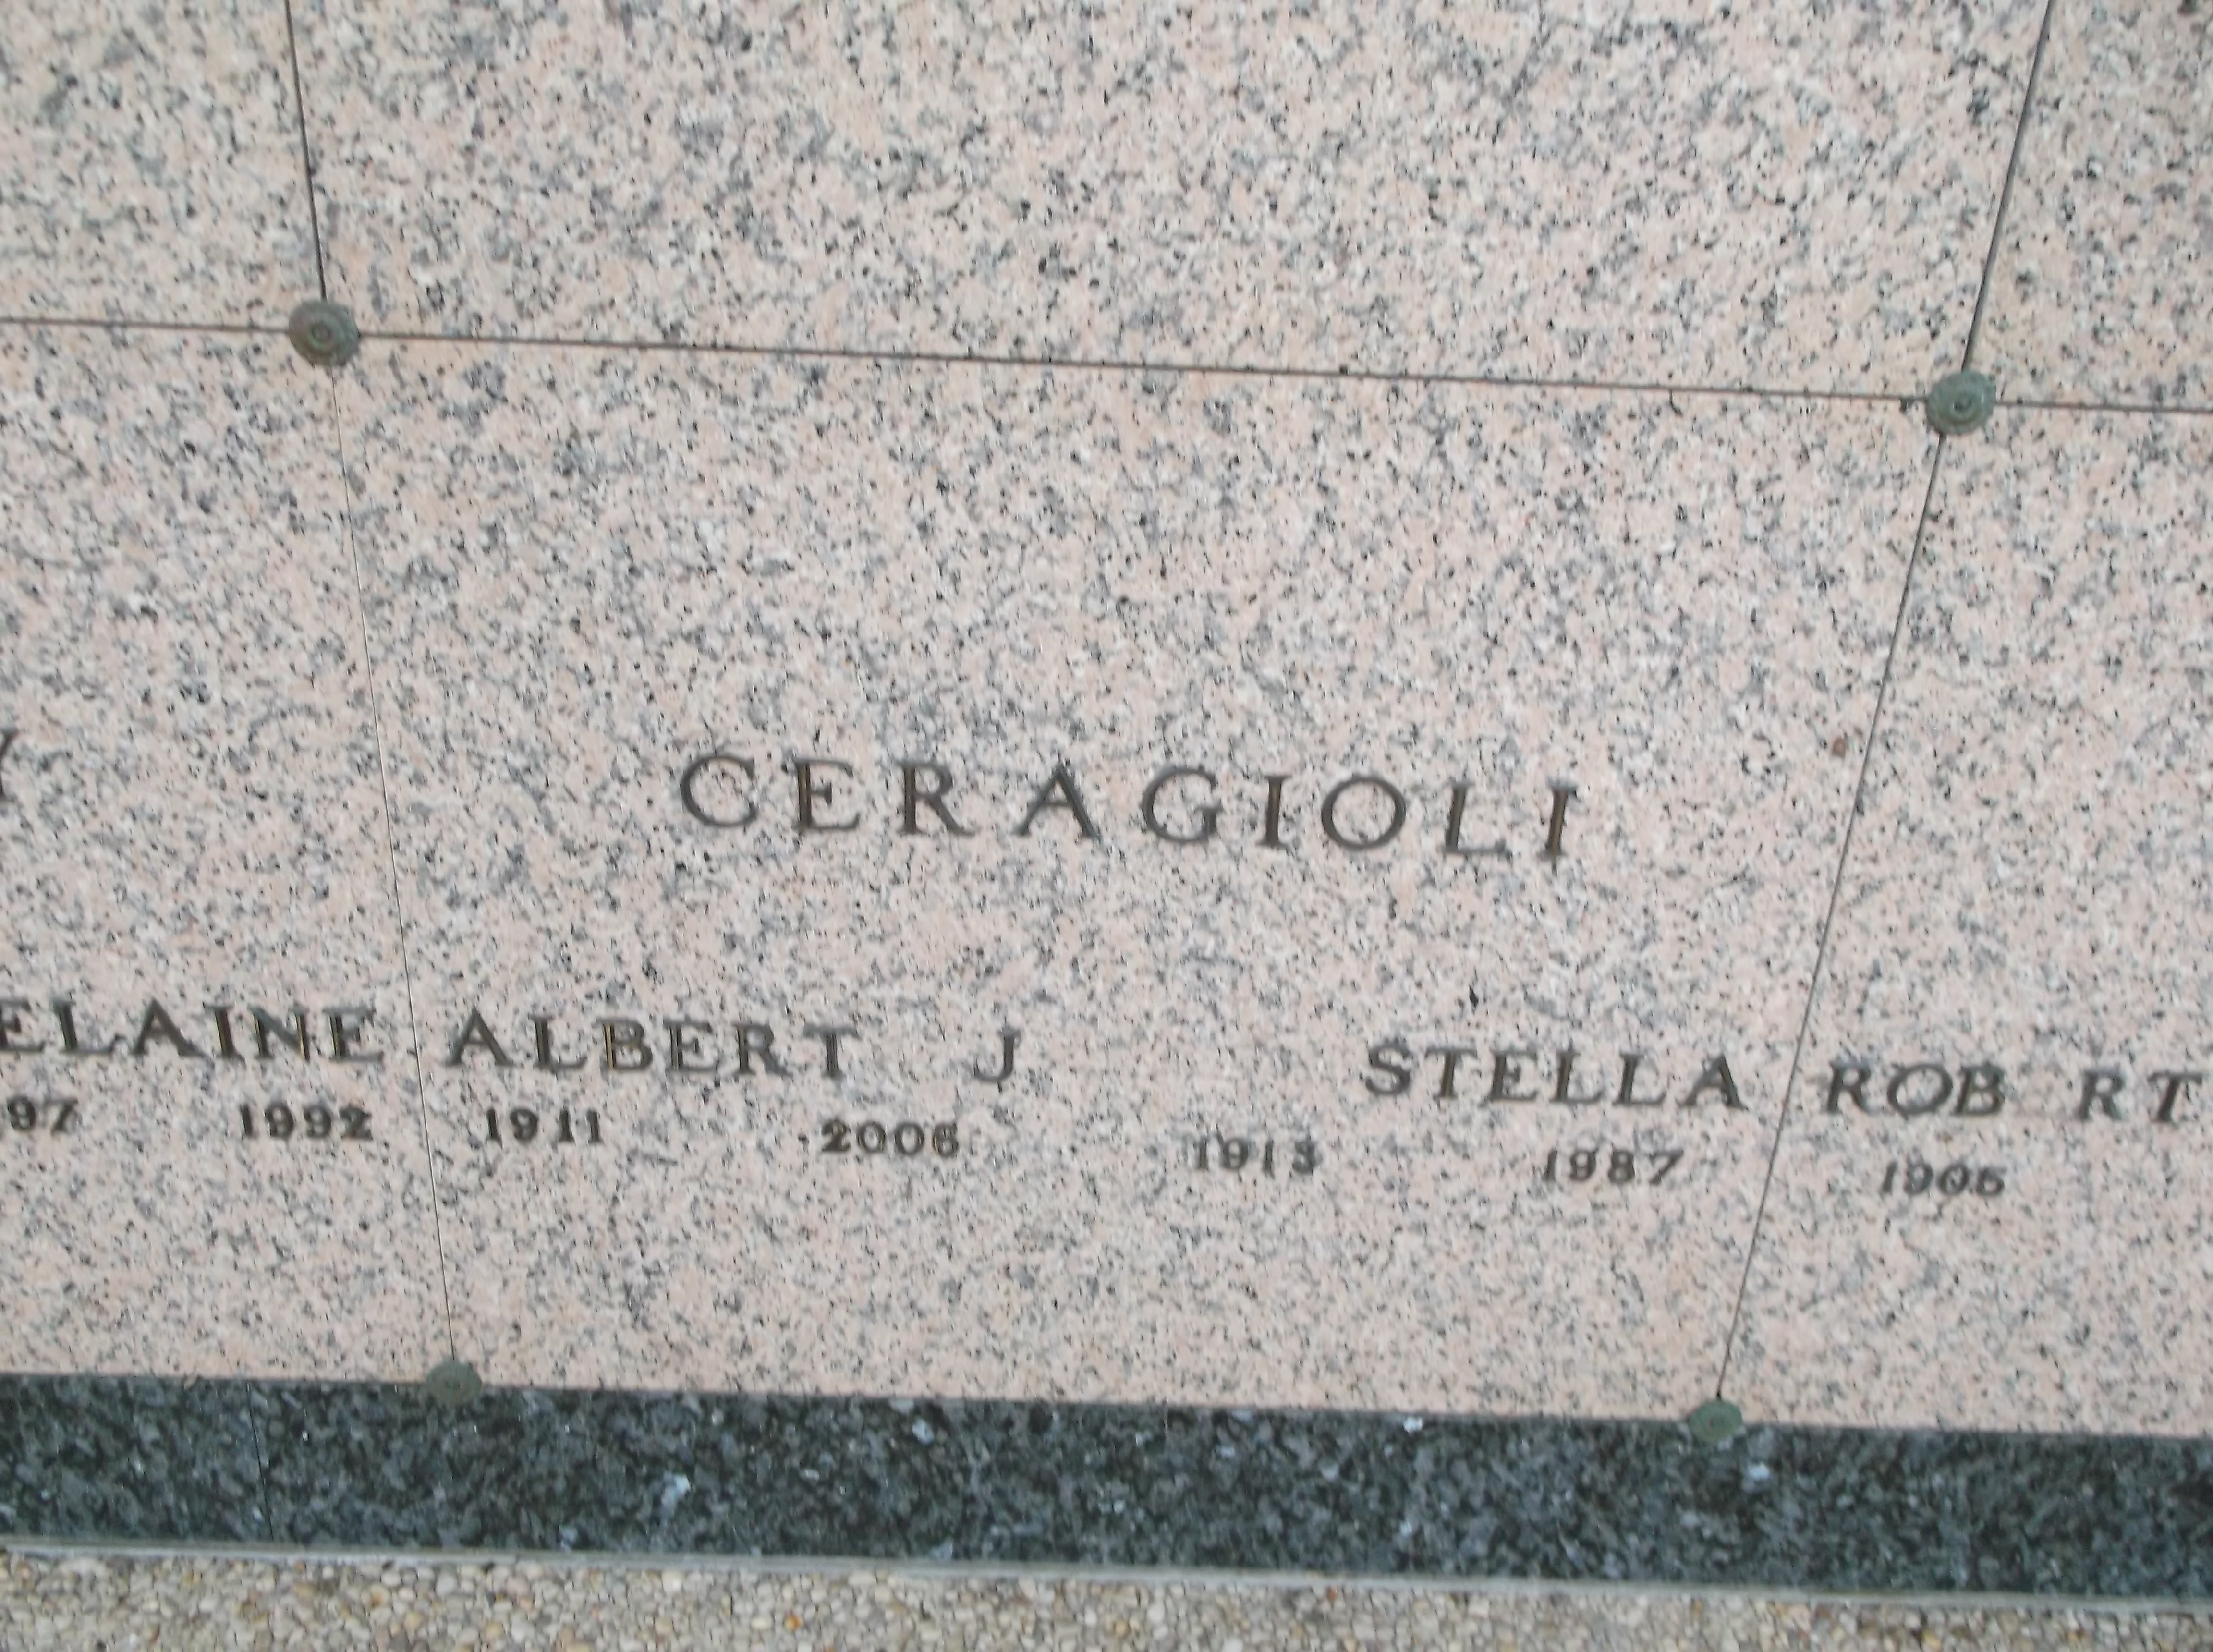 Stella Ceragioli